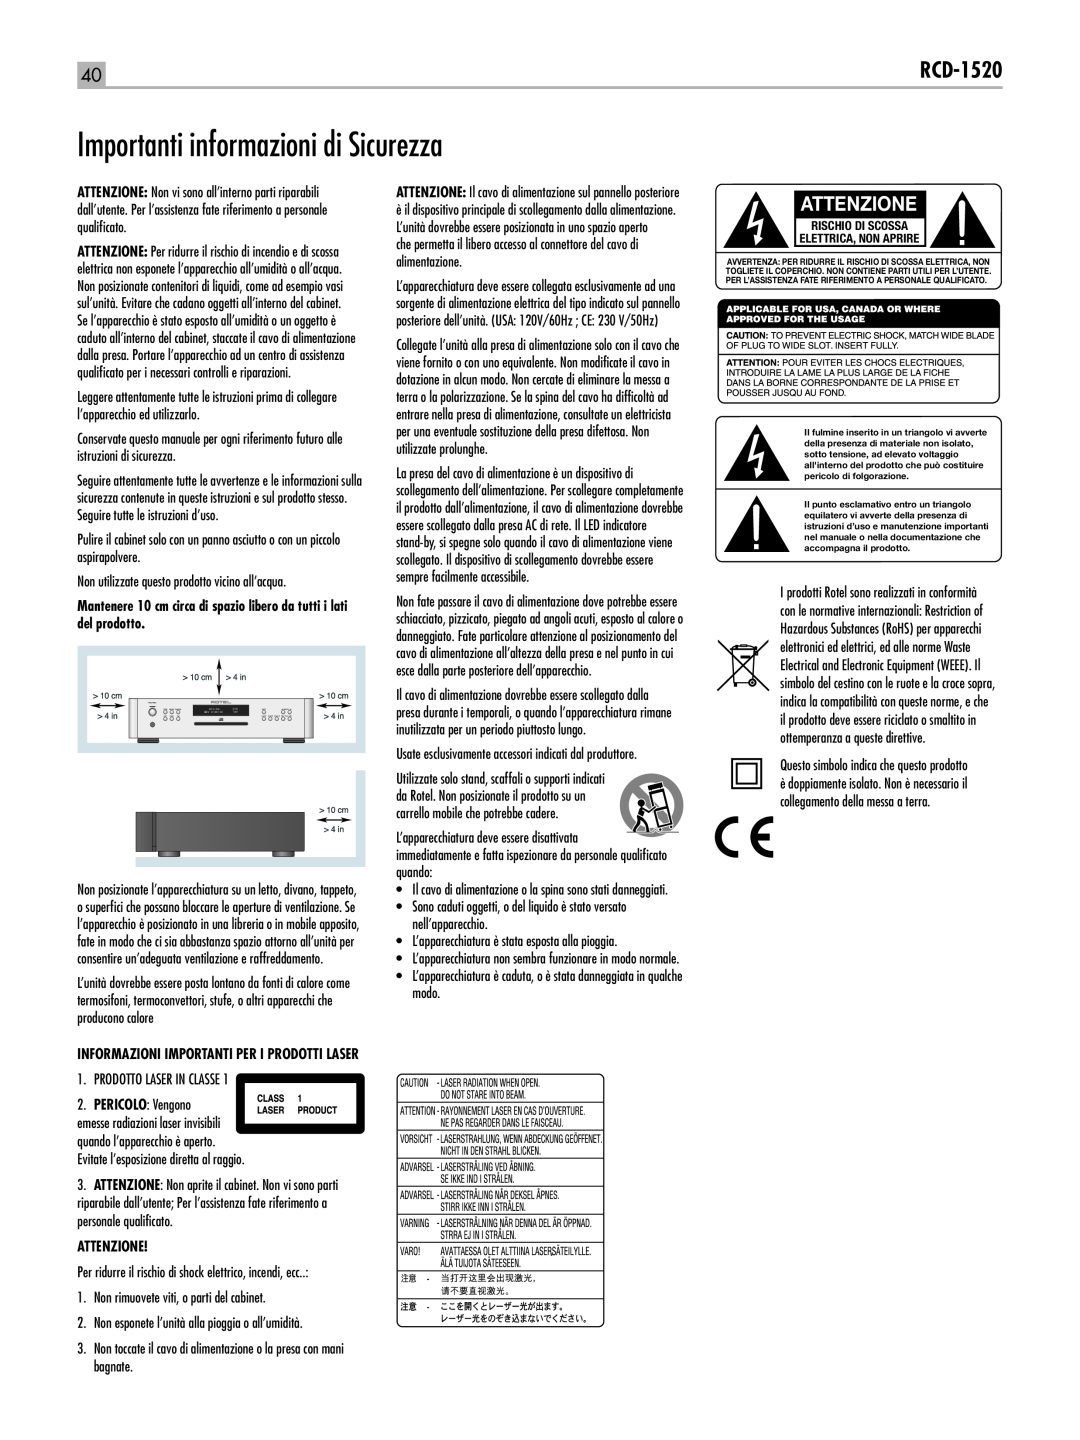 Rotel RCD-1520 owner manual Importanti informazioni di Sicurezza, Attenzione 